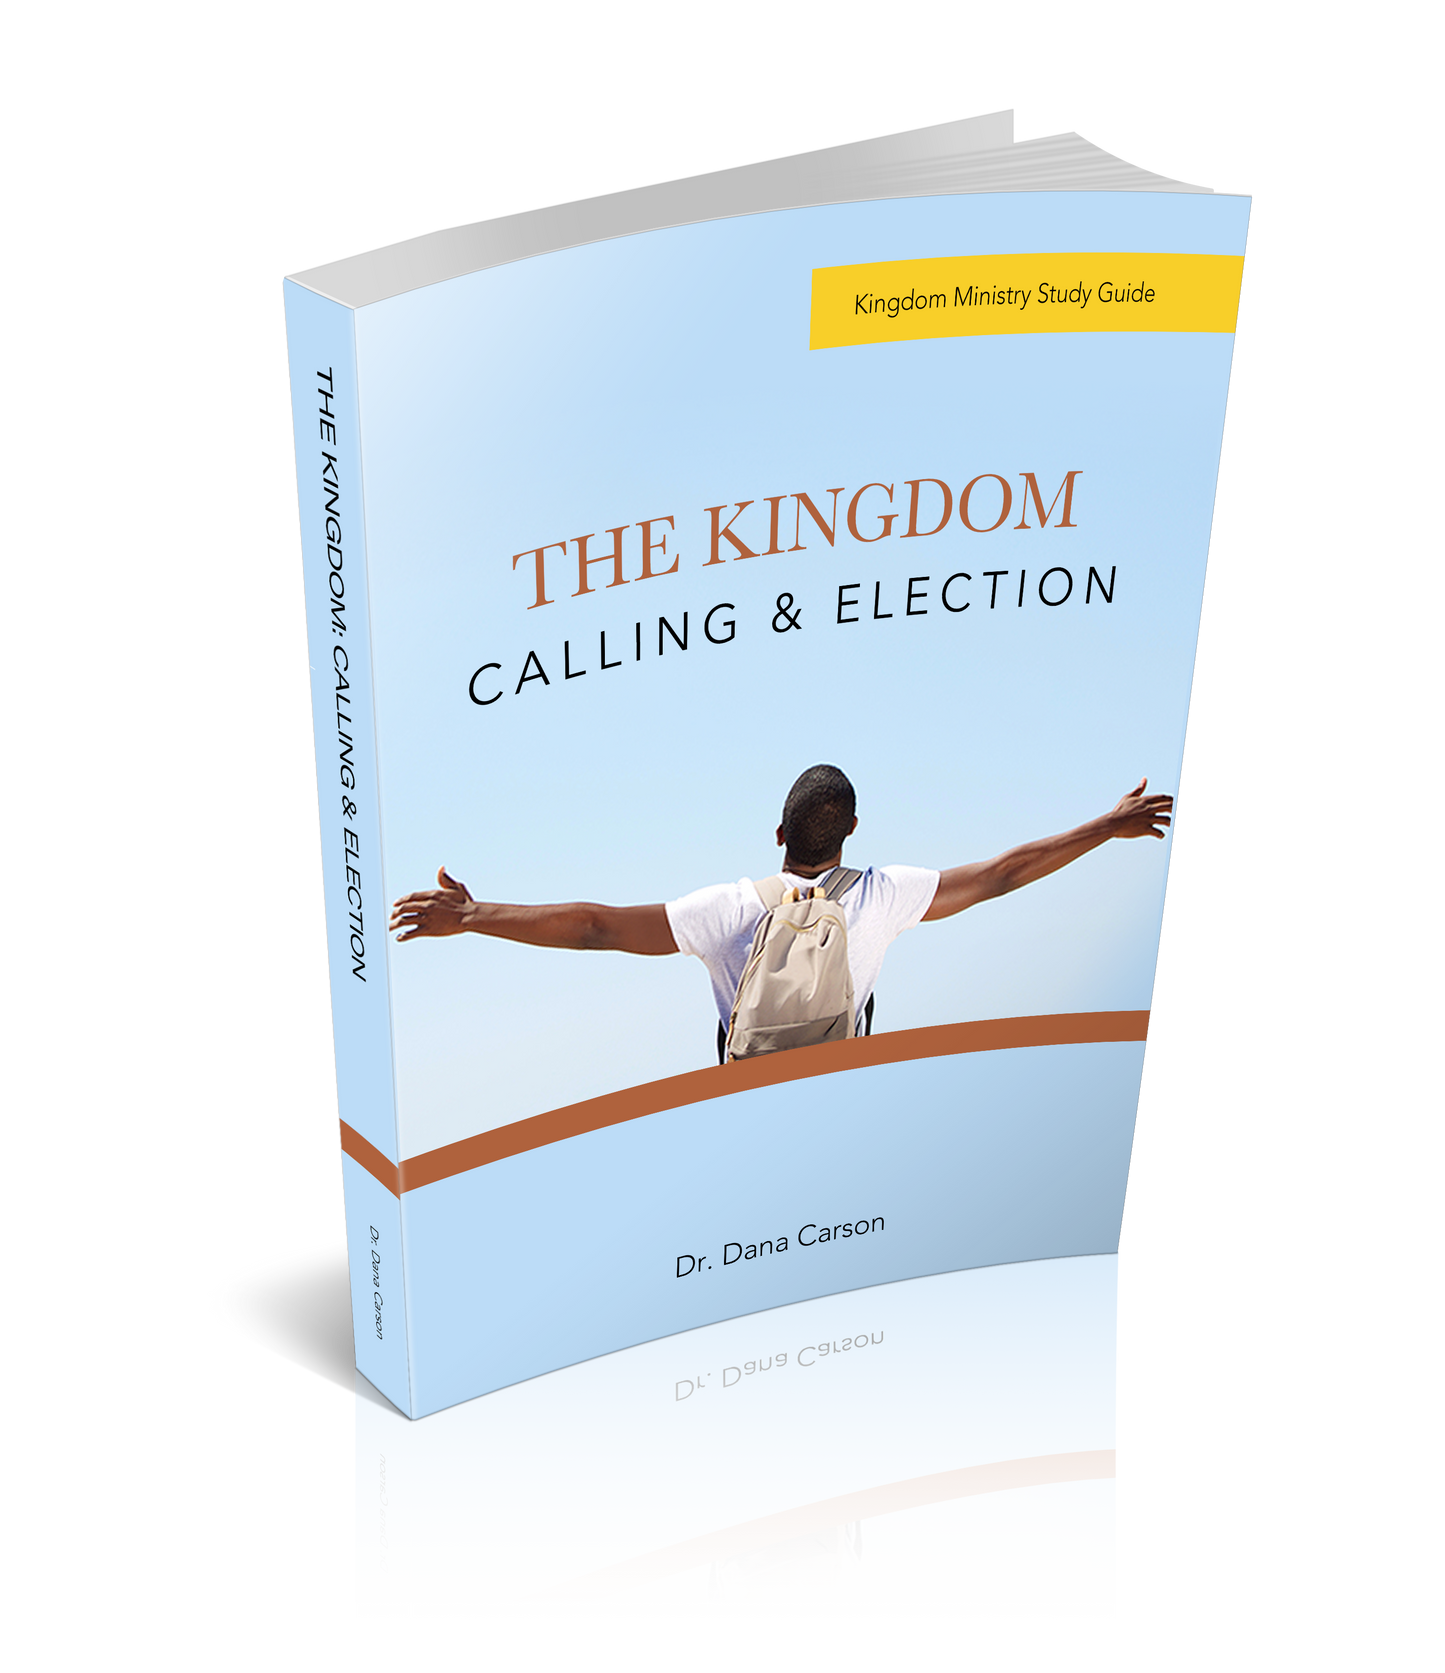 The Kingdom: Calling & Election Kingdom Bible Study Guide